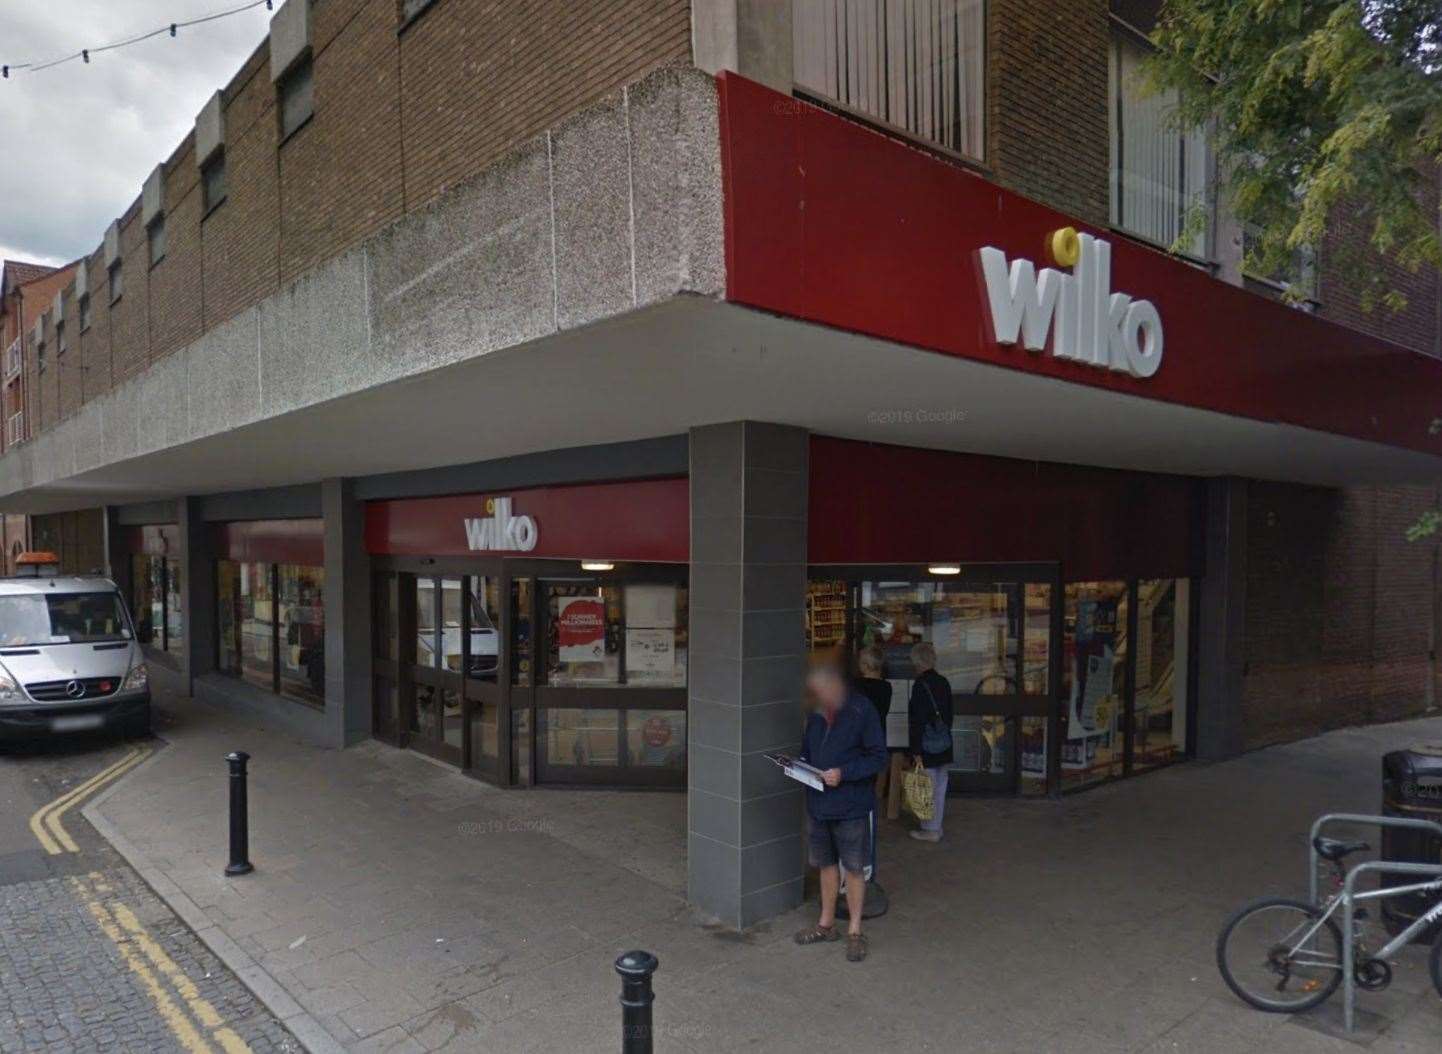 Ramsgate Wilko is one of many empty shells the retailer has left behind